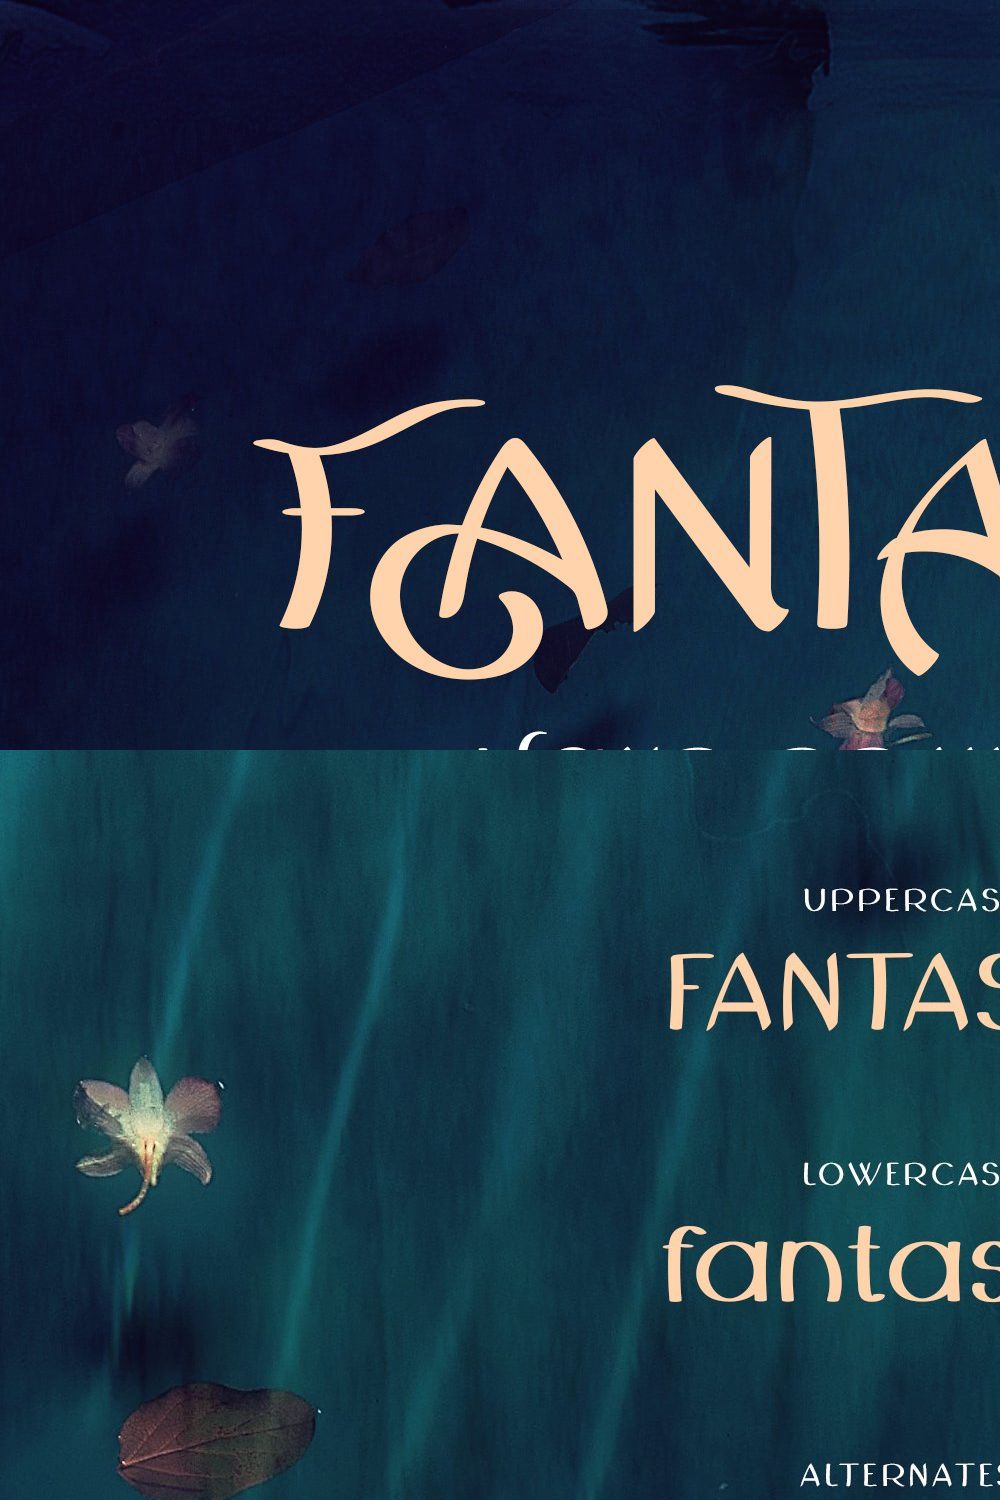 Fantasya Hand Drawn Font pinterest preview image.